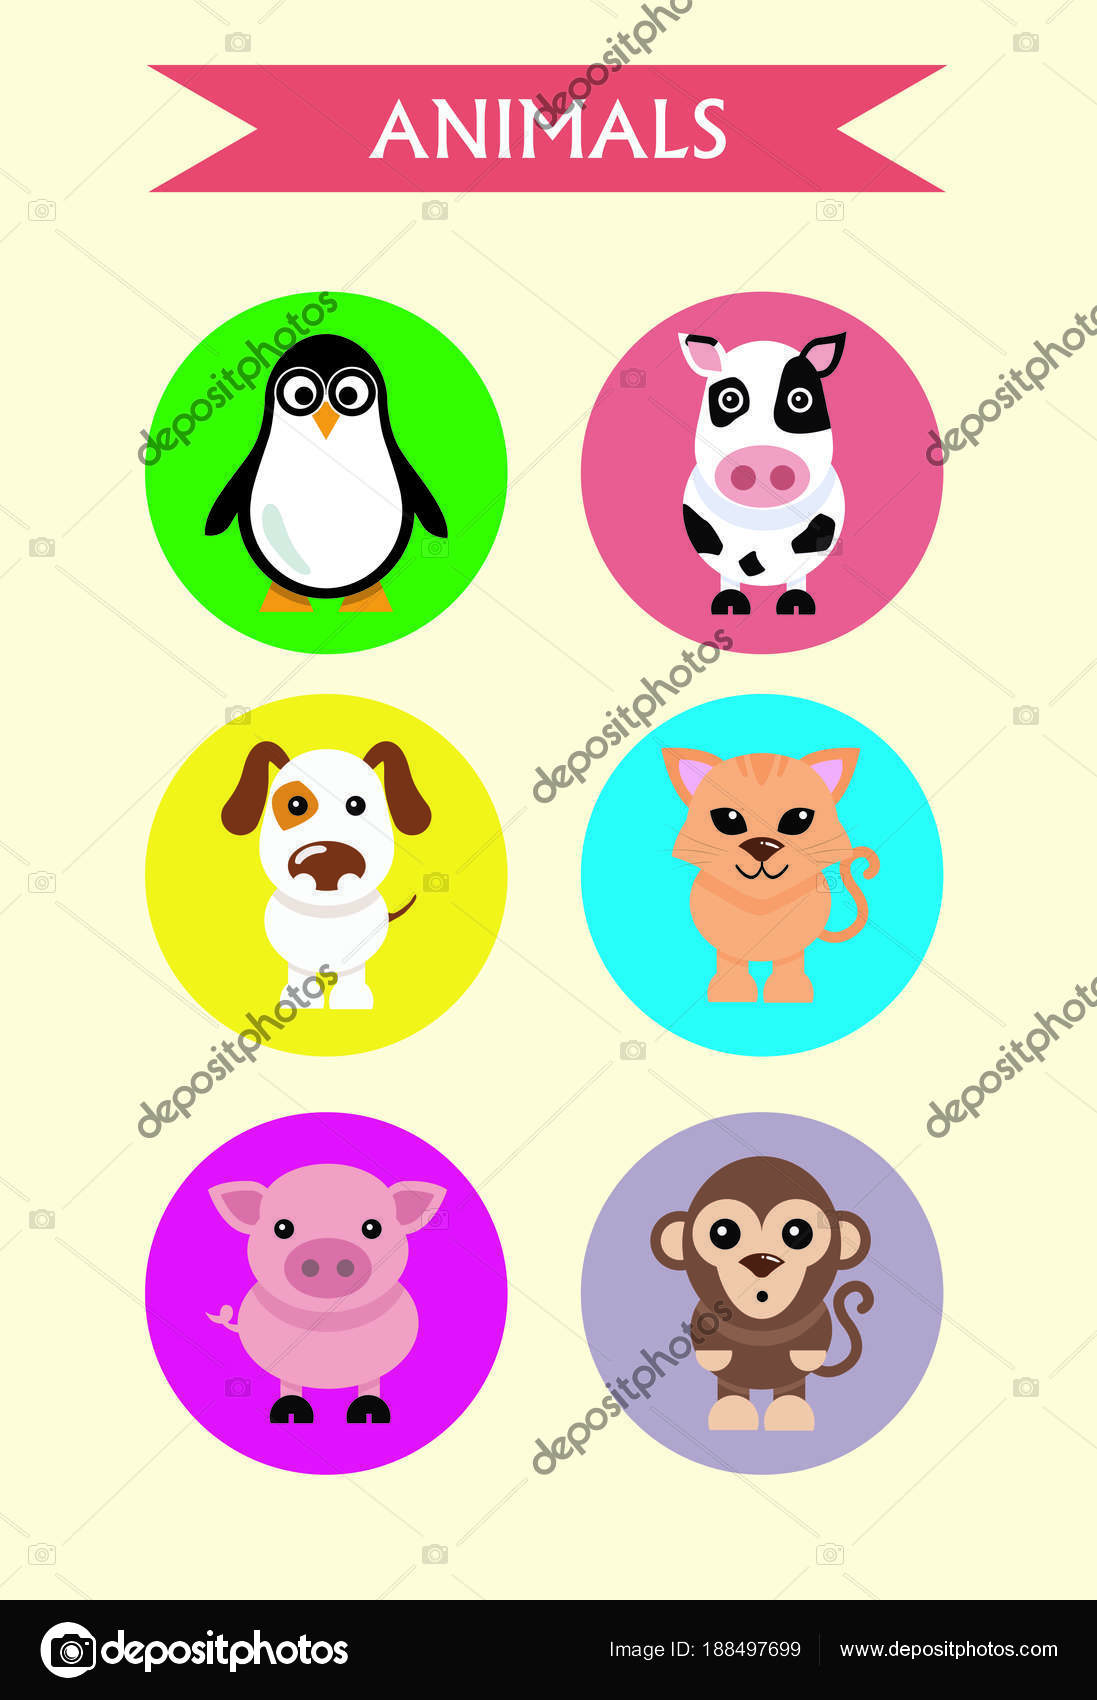 https://st3.depositphotos.com/16576842/18849/v/1600/depositphotos_188497699-stock-illustration-set-stickers-animals-dog-cat.jpg